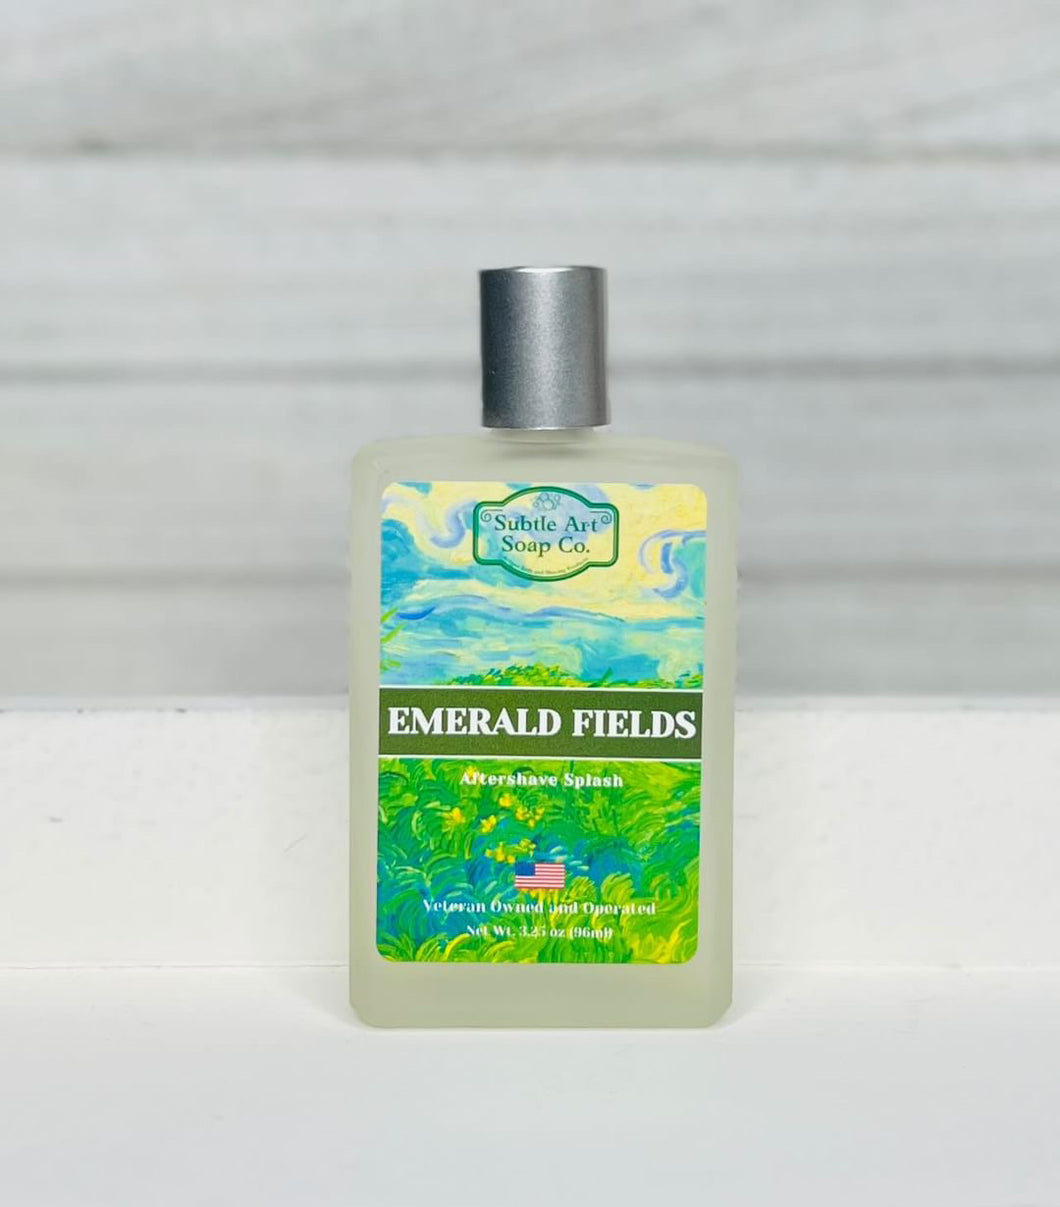 Subtle Art Soap Co.- Emerald Fields Aftershave